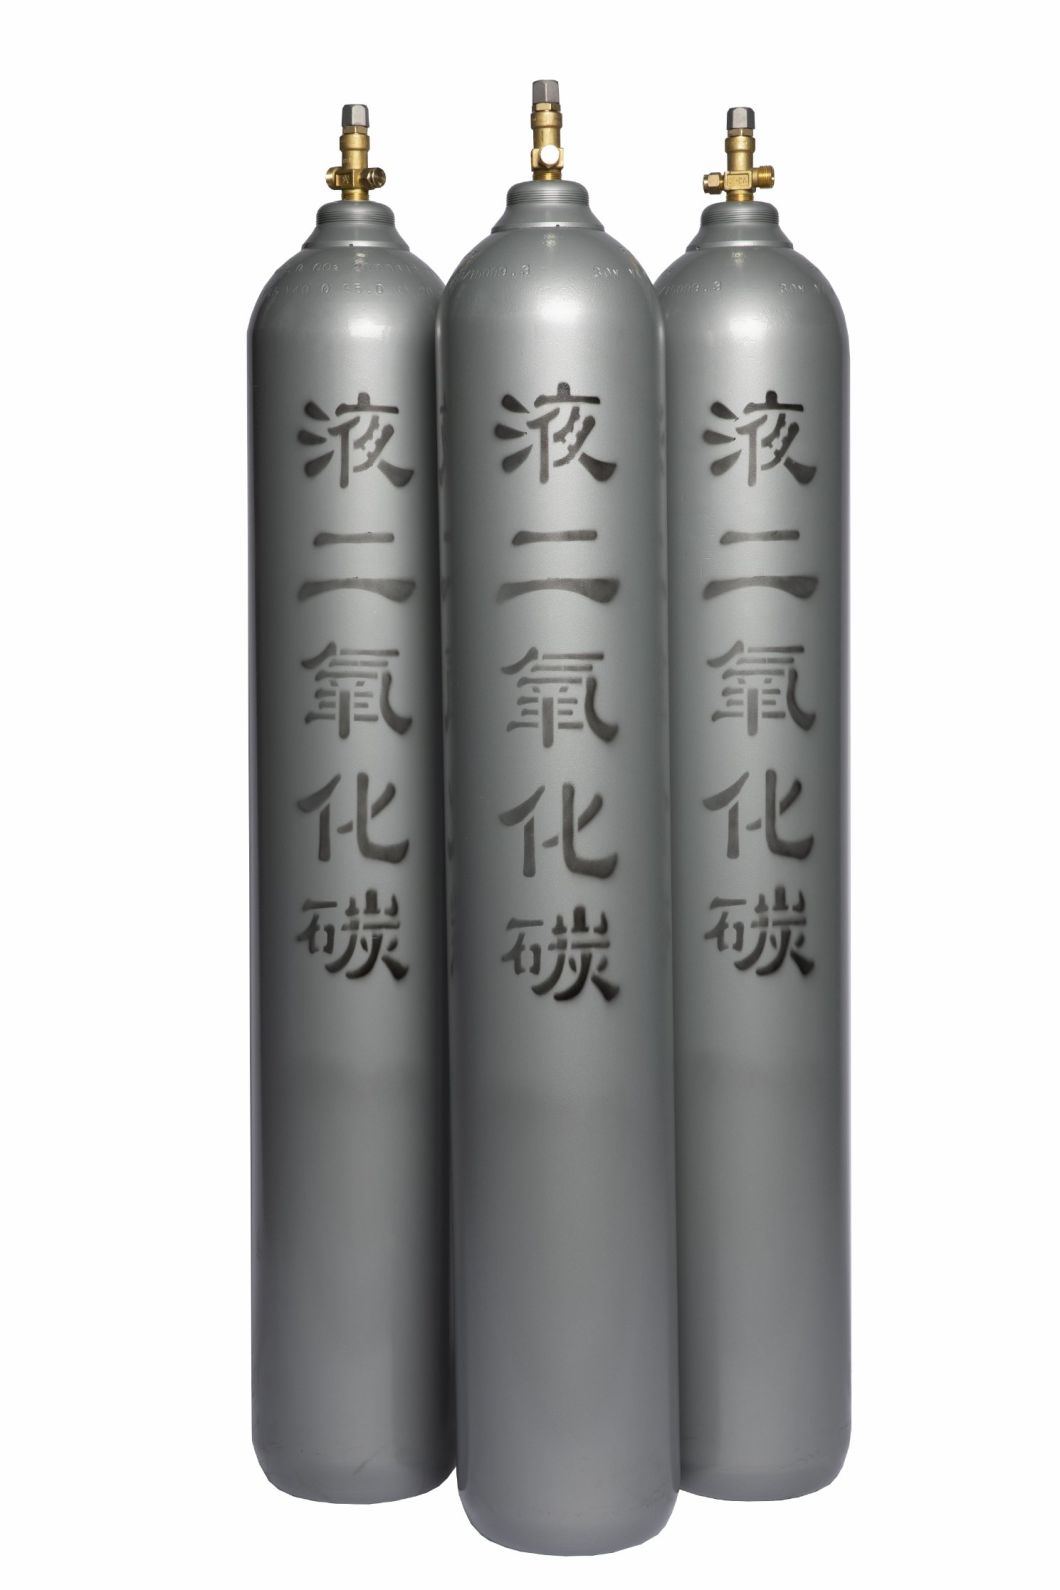 40L150bar 5.7mm Seamless Steel Industrial CO2 Carbon Dioxide Gas Cylinder